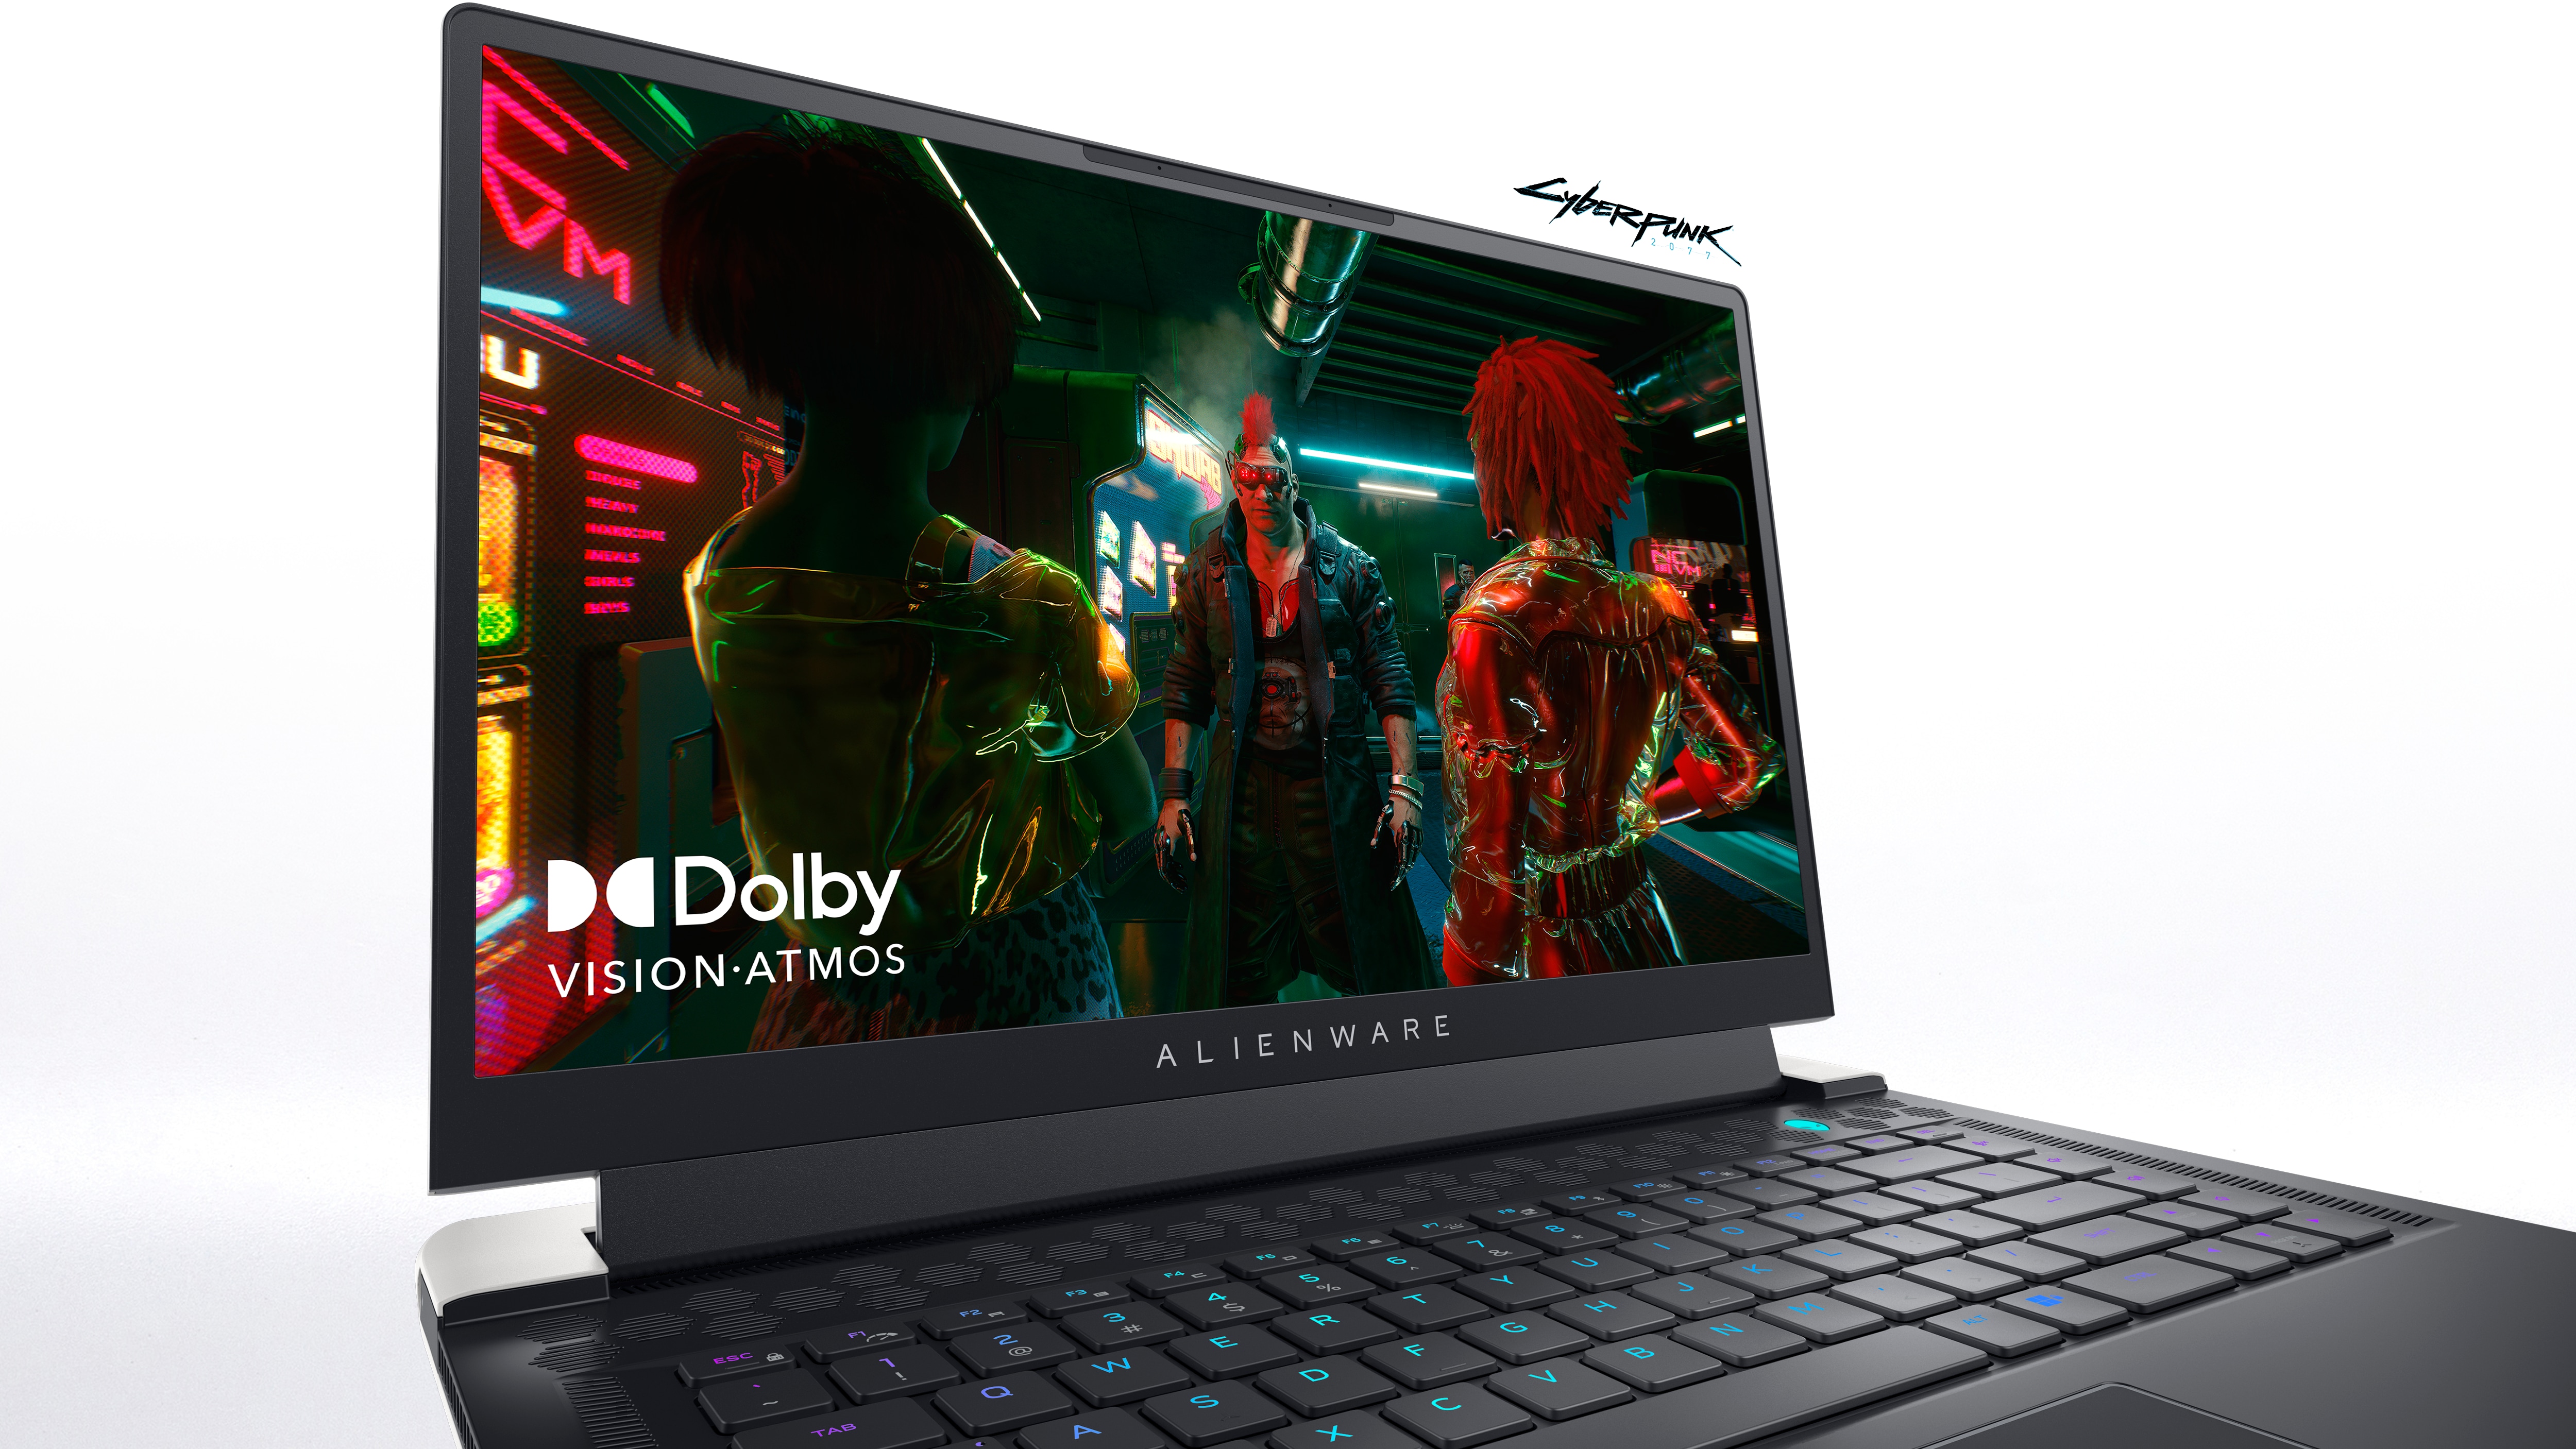 Dell Alienware x15 R2 遊戲專用筆記型電腦的圖片，螢幕呈現遊戲影像和 Dolby Vision-Atmos 標誌。